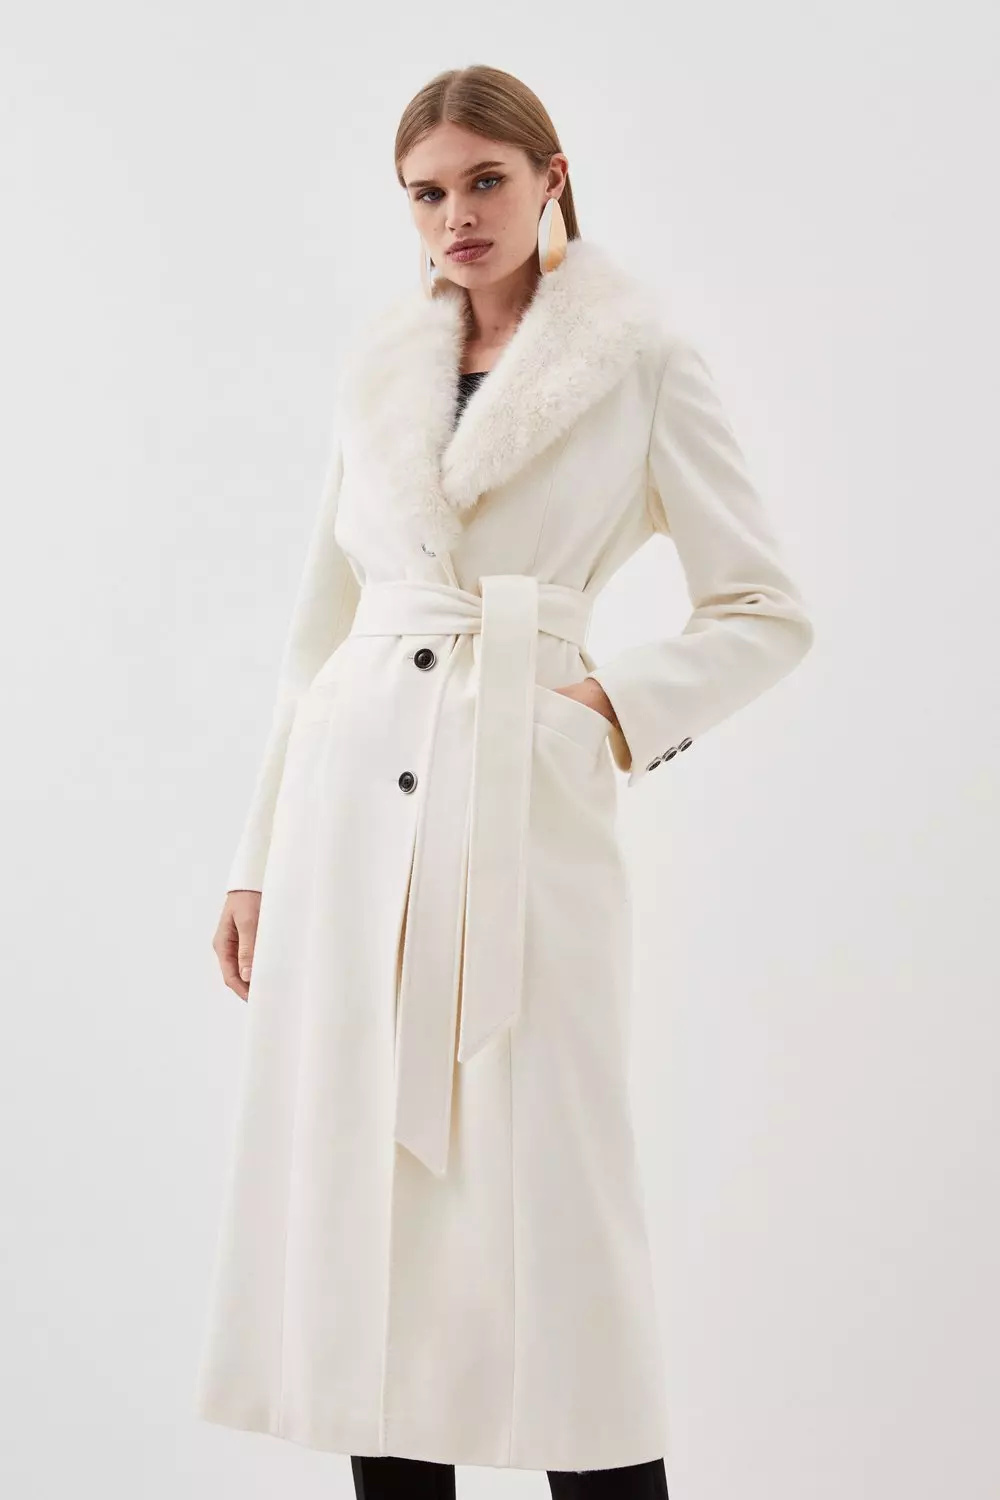 LUCKY BRAND Womens Ivory Faux Fur Denim Jacket Size: XS 